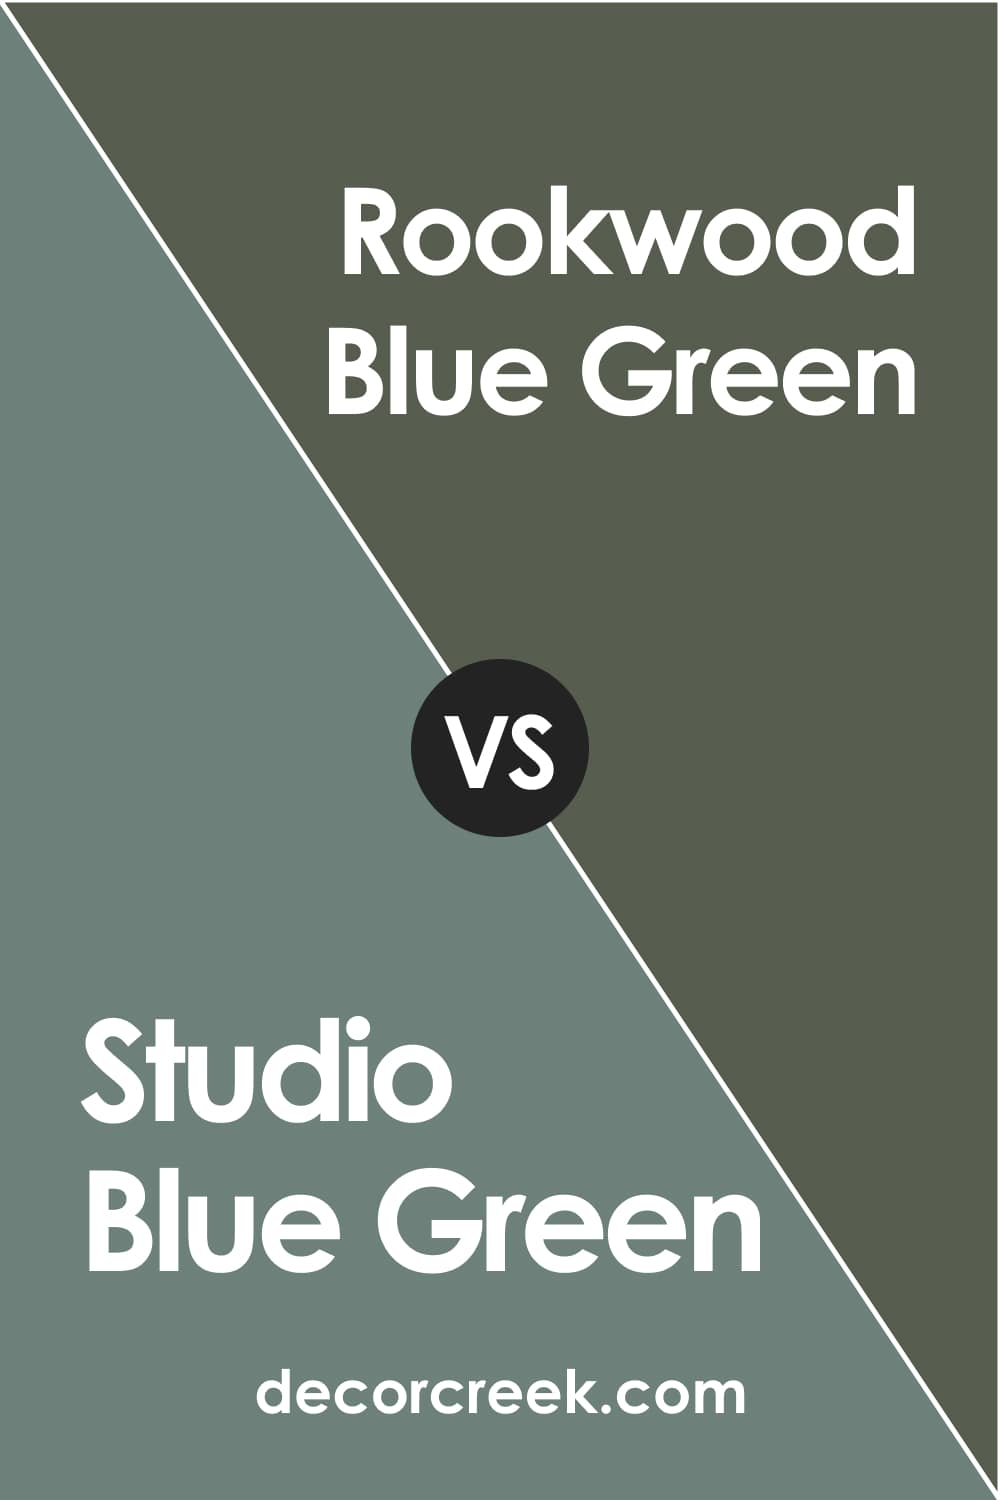 Studio Blue Green vs Rookwood Blue Green